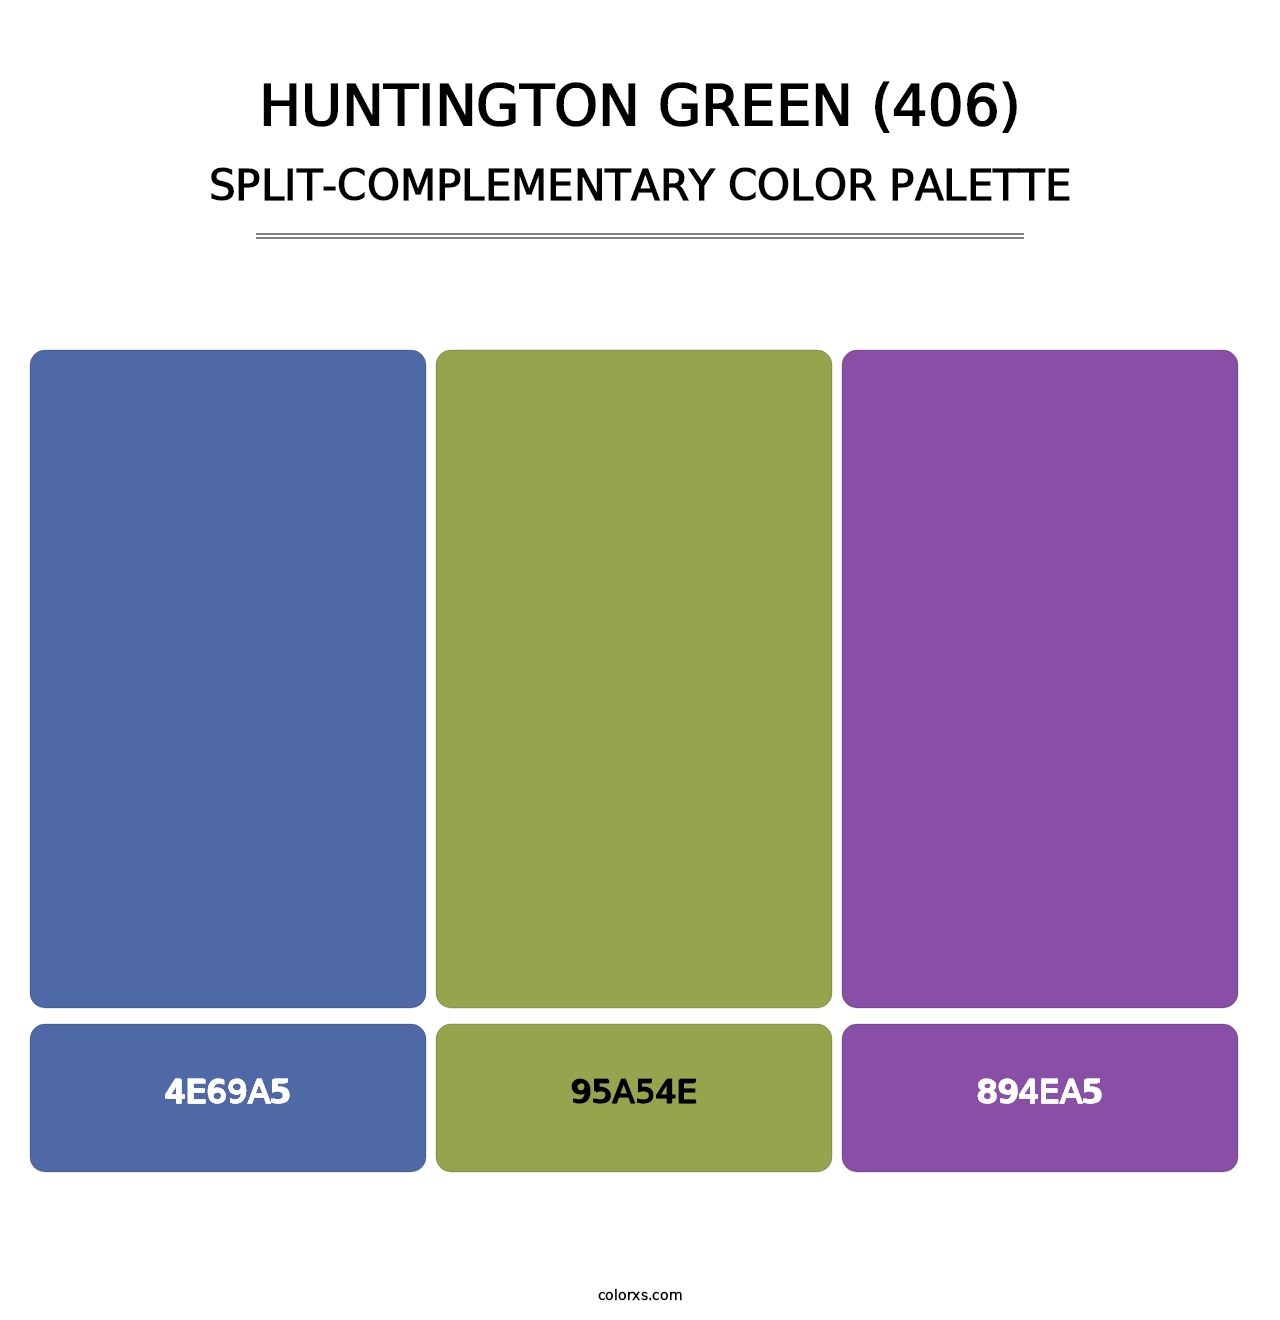 Huntington Green (406) - Split-Complementary Color Palette